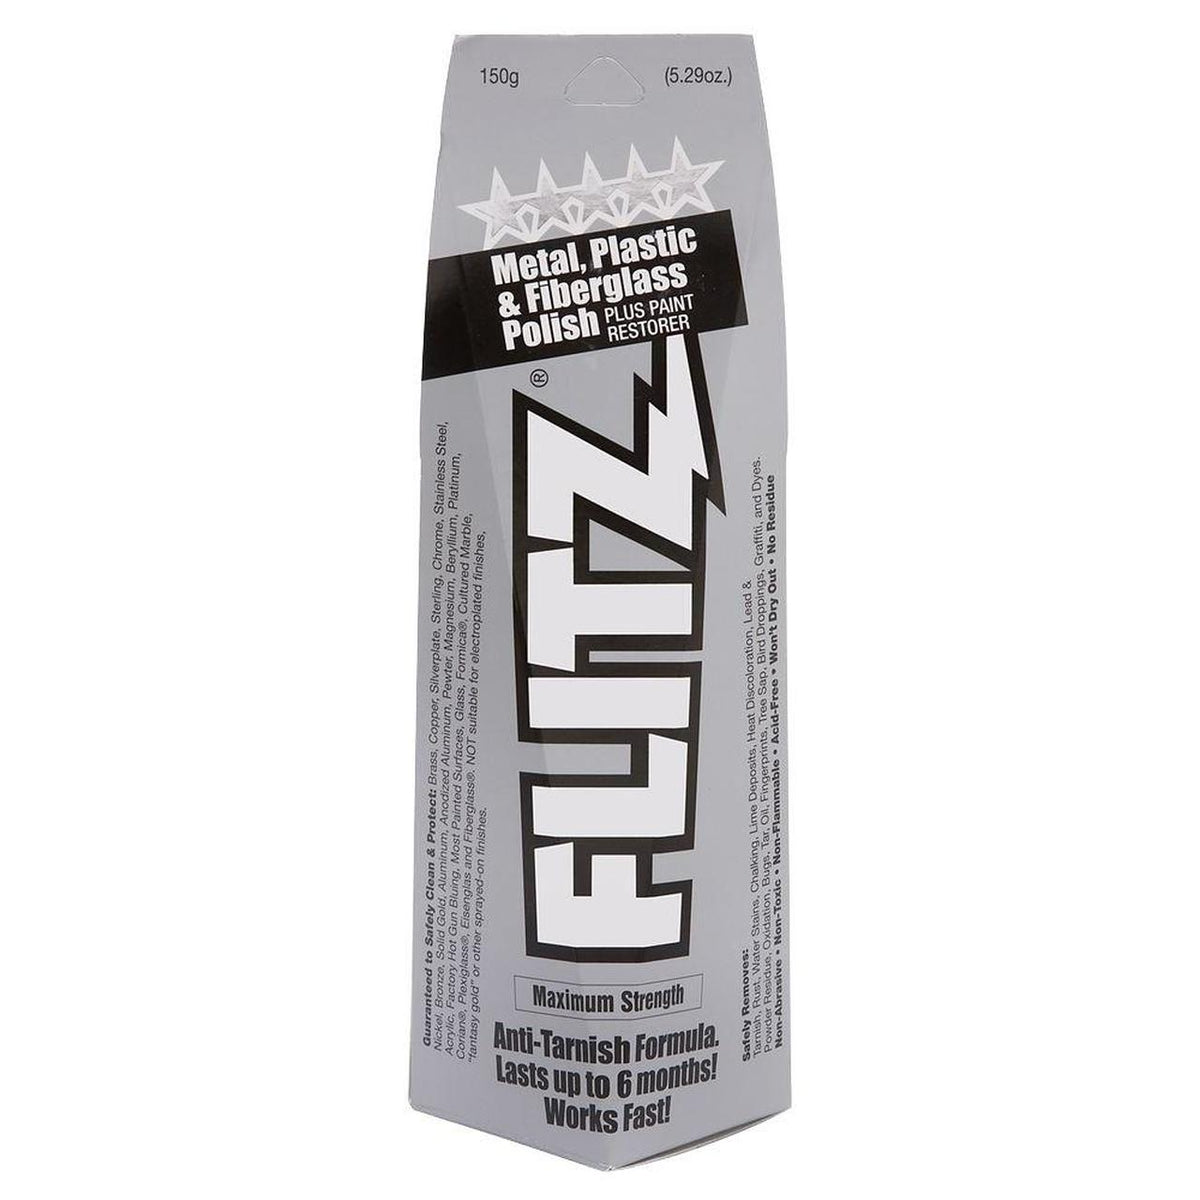 Flitz Paste Metal Polish, Fiberglass & Paint Restorer – Pilots HQ LLC.